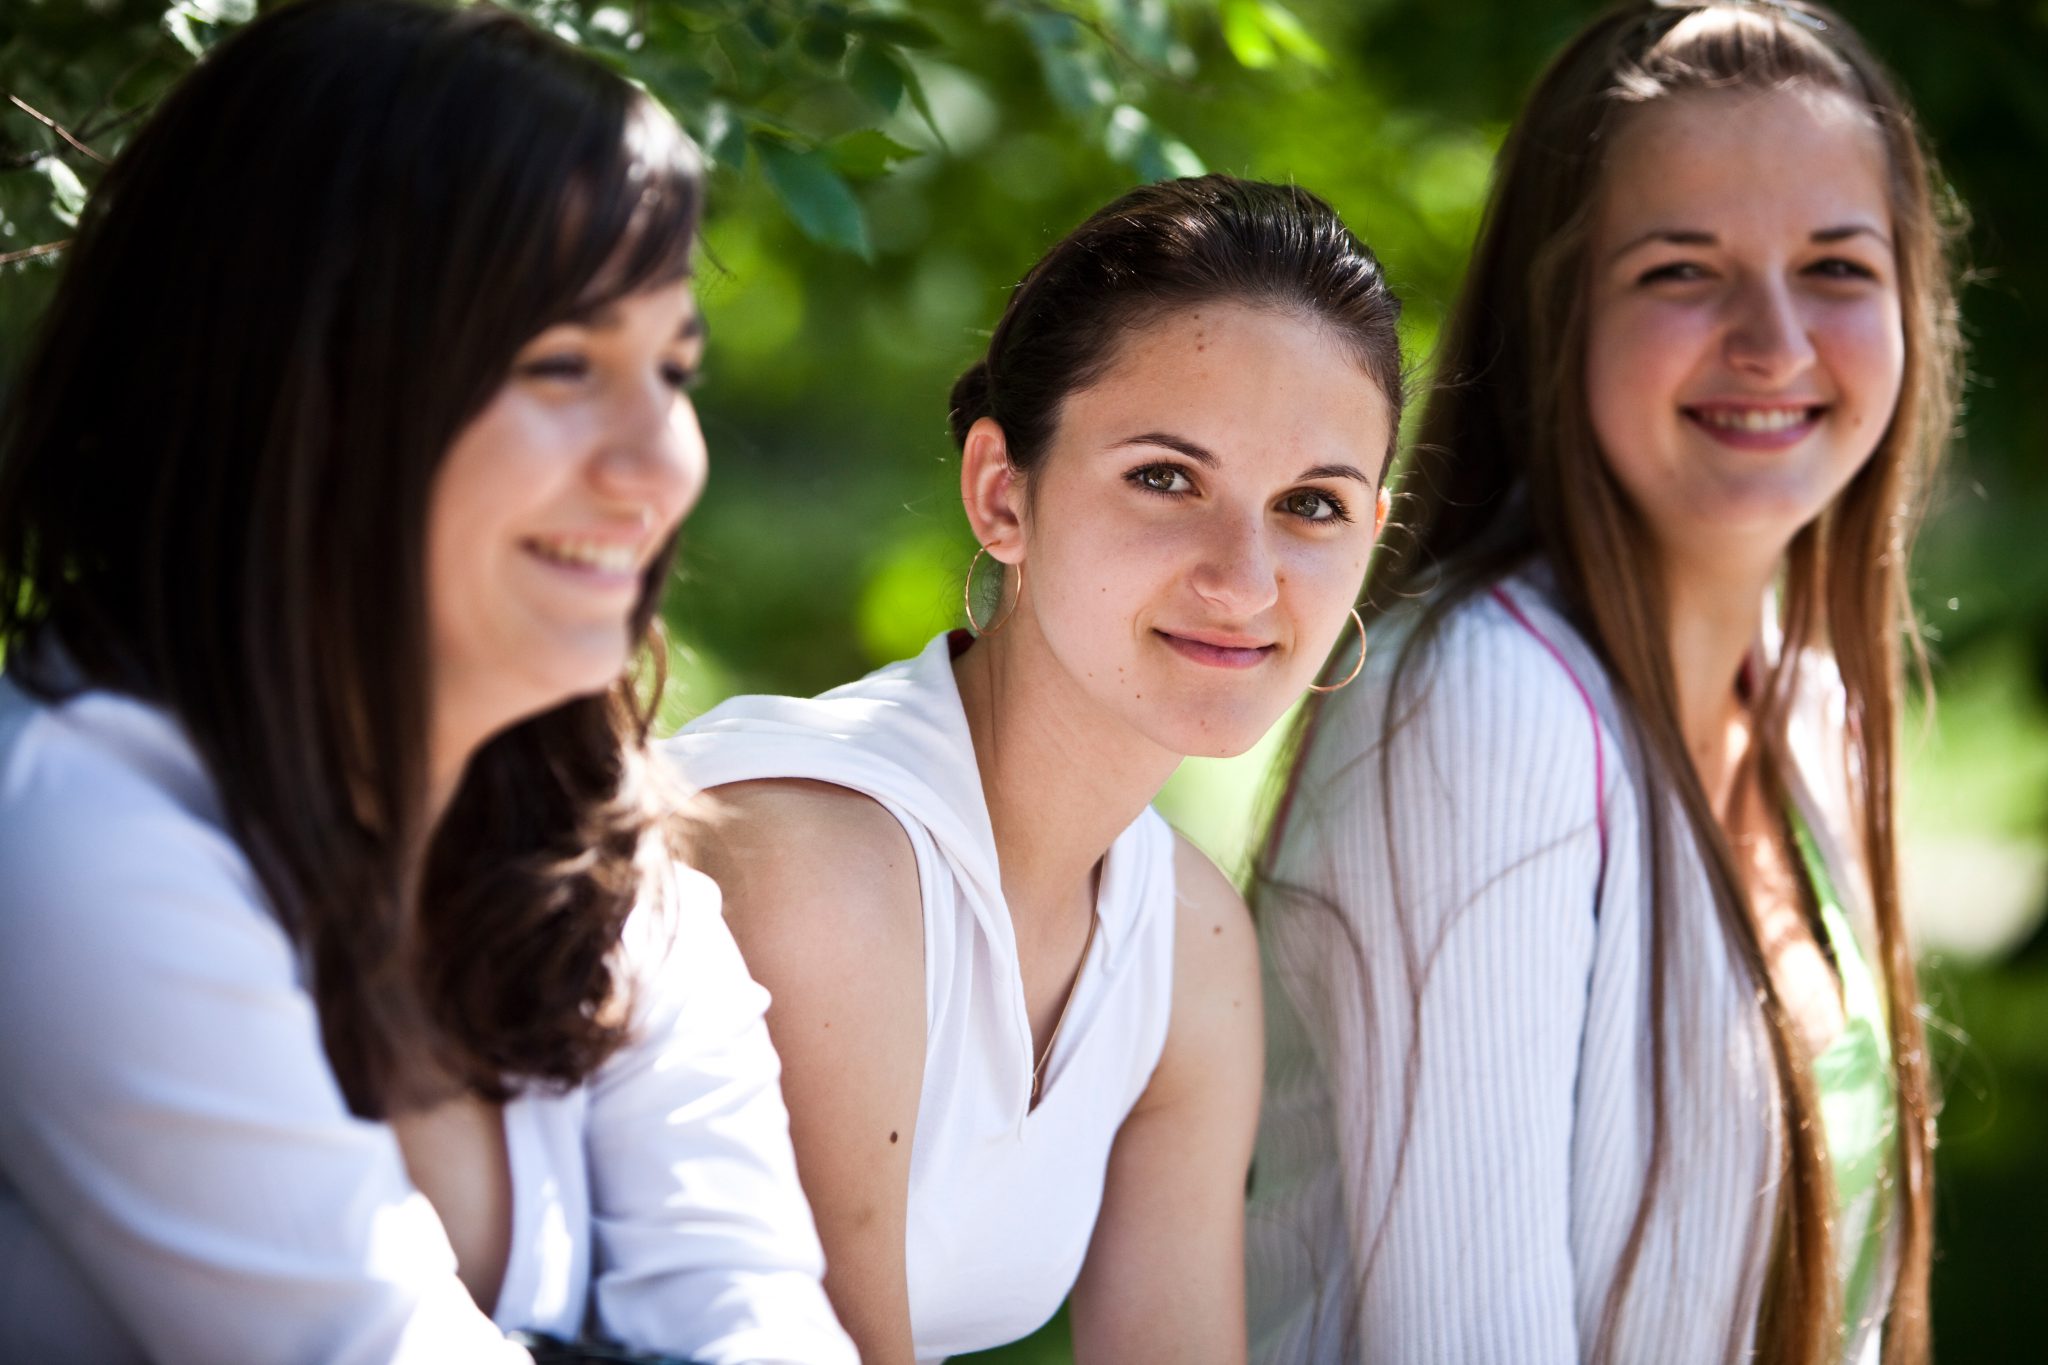 Teen girls in Moldova